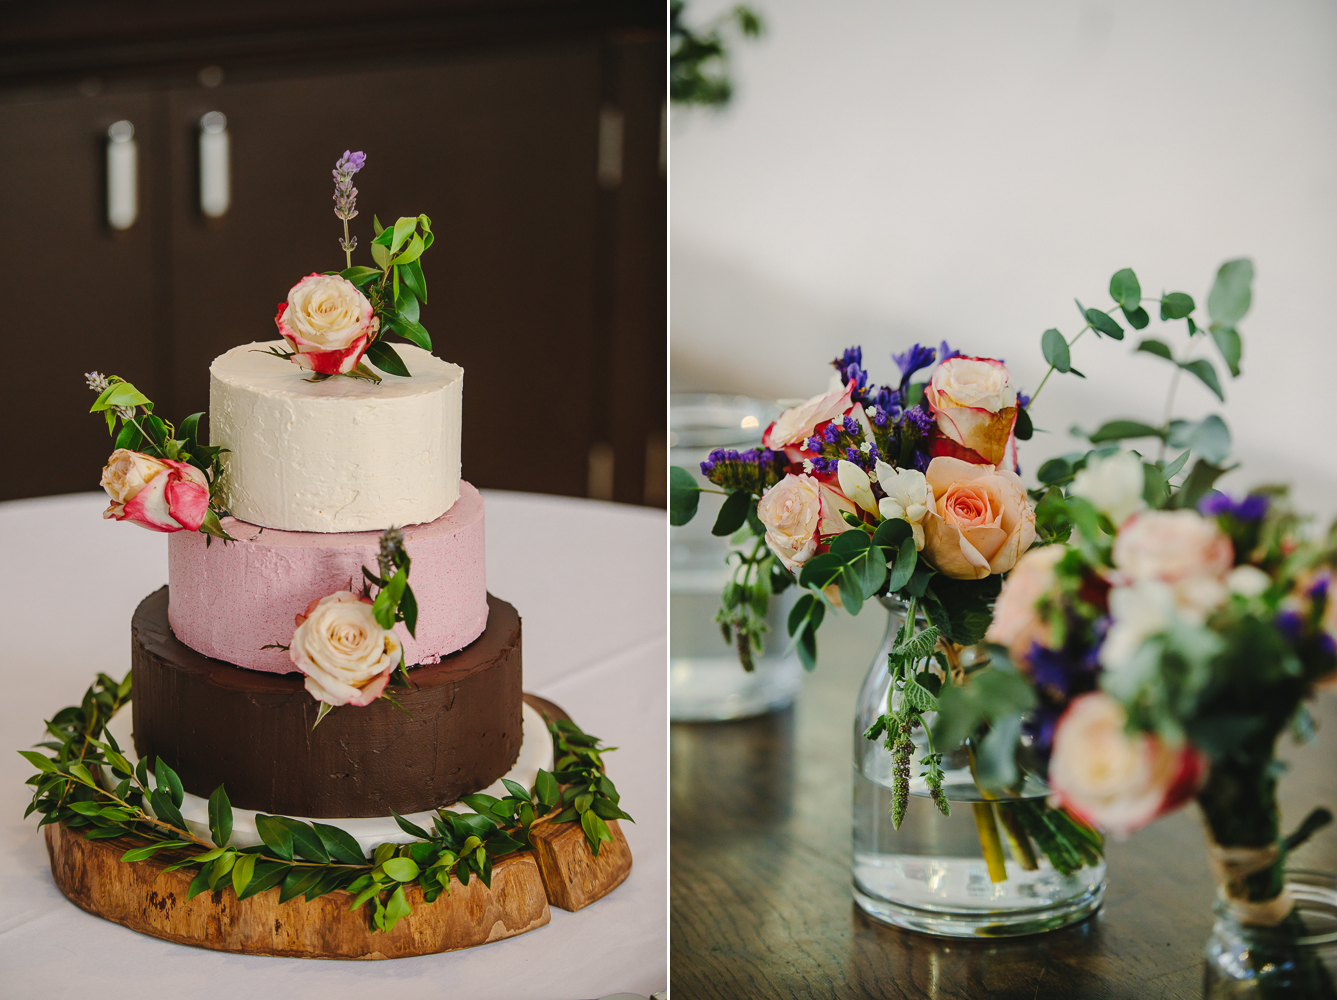 Wedding cake and wedding flowers